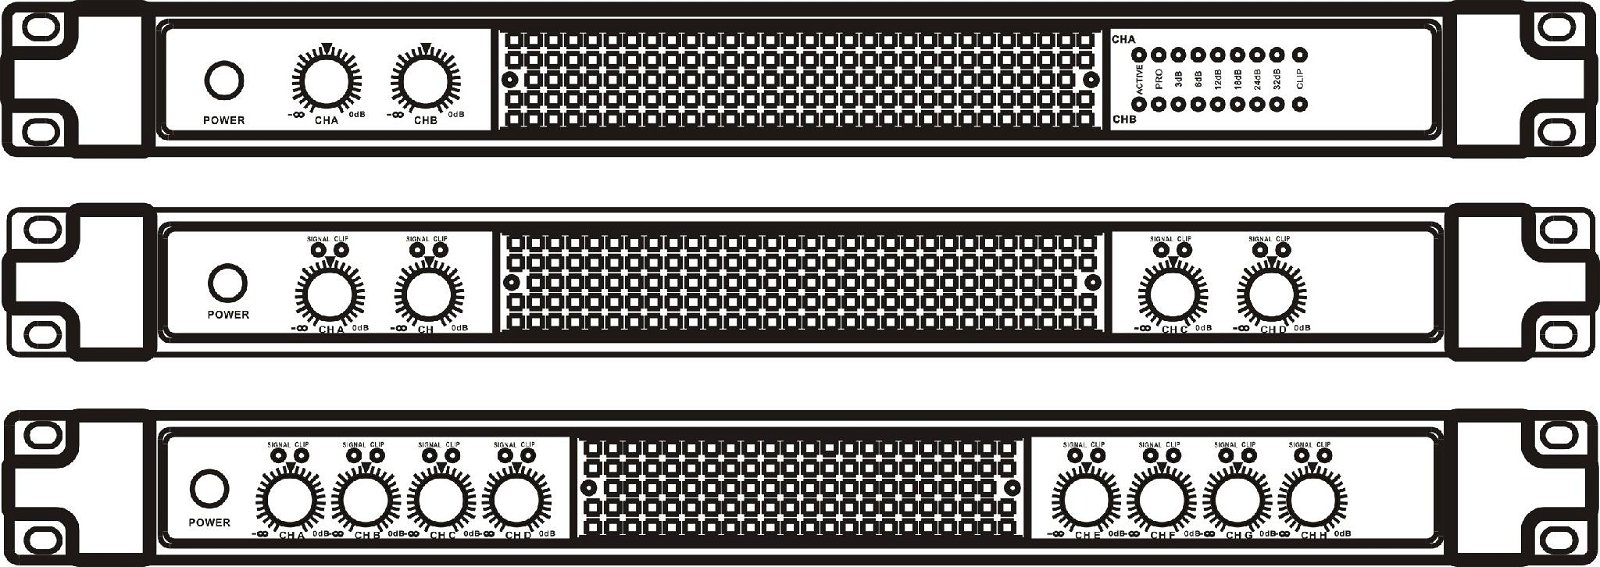 Professional power amplifier D series 3